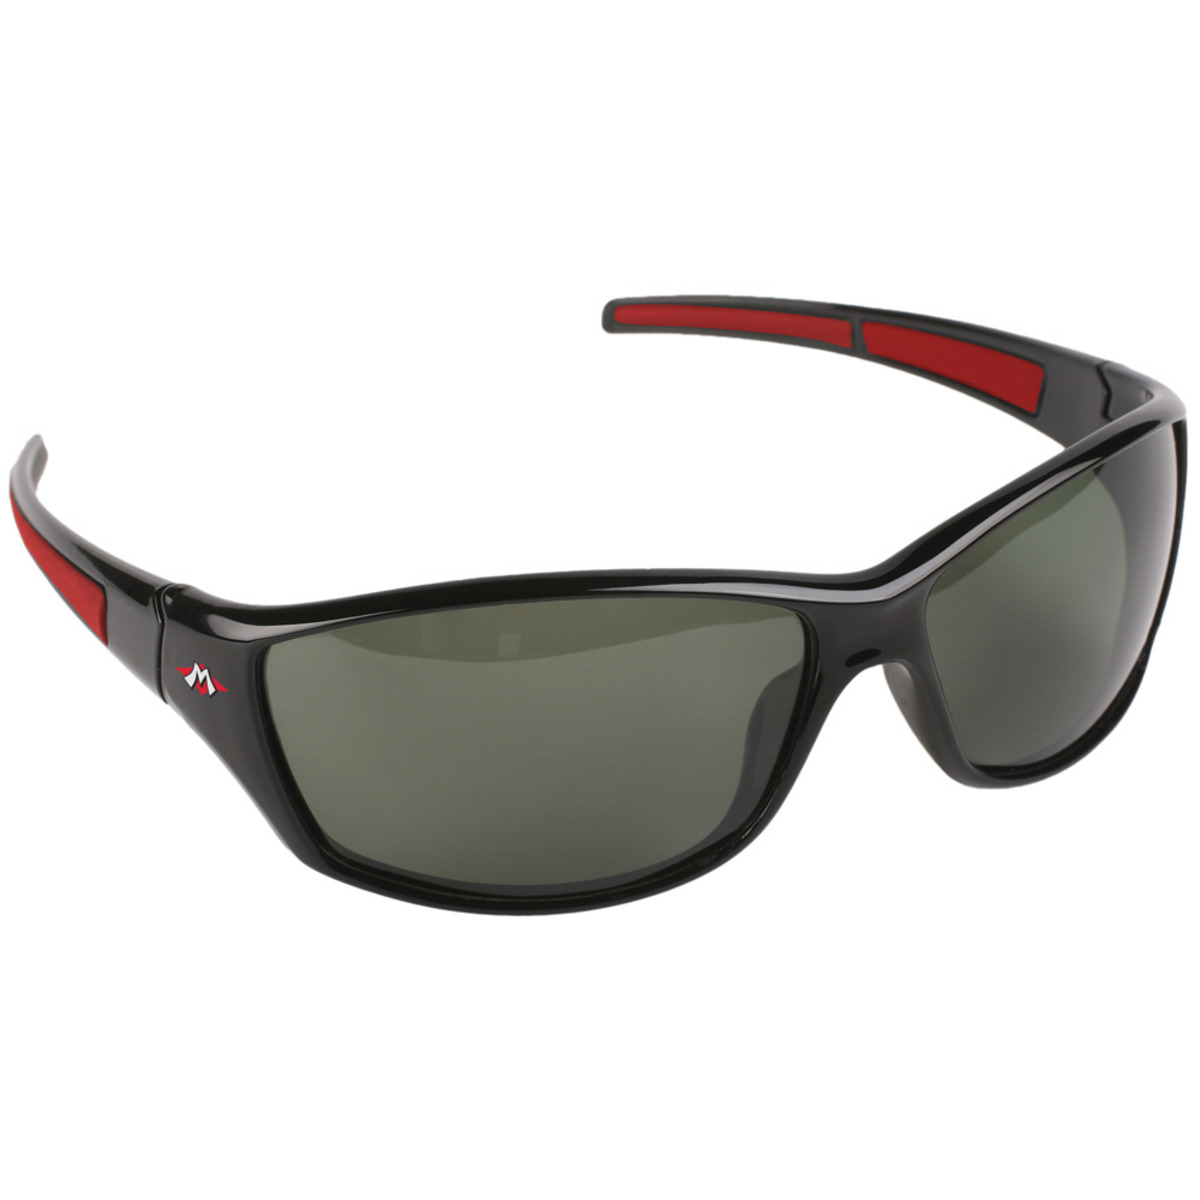 Mikado Sunglasses Polarized - 7501 GREEN